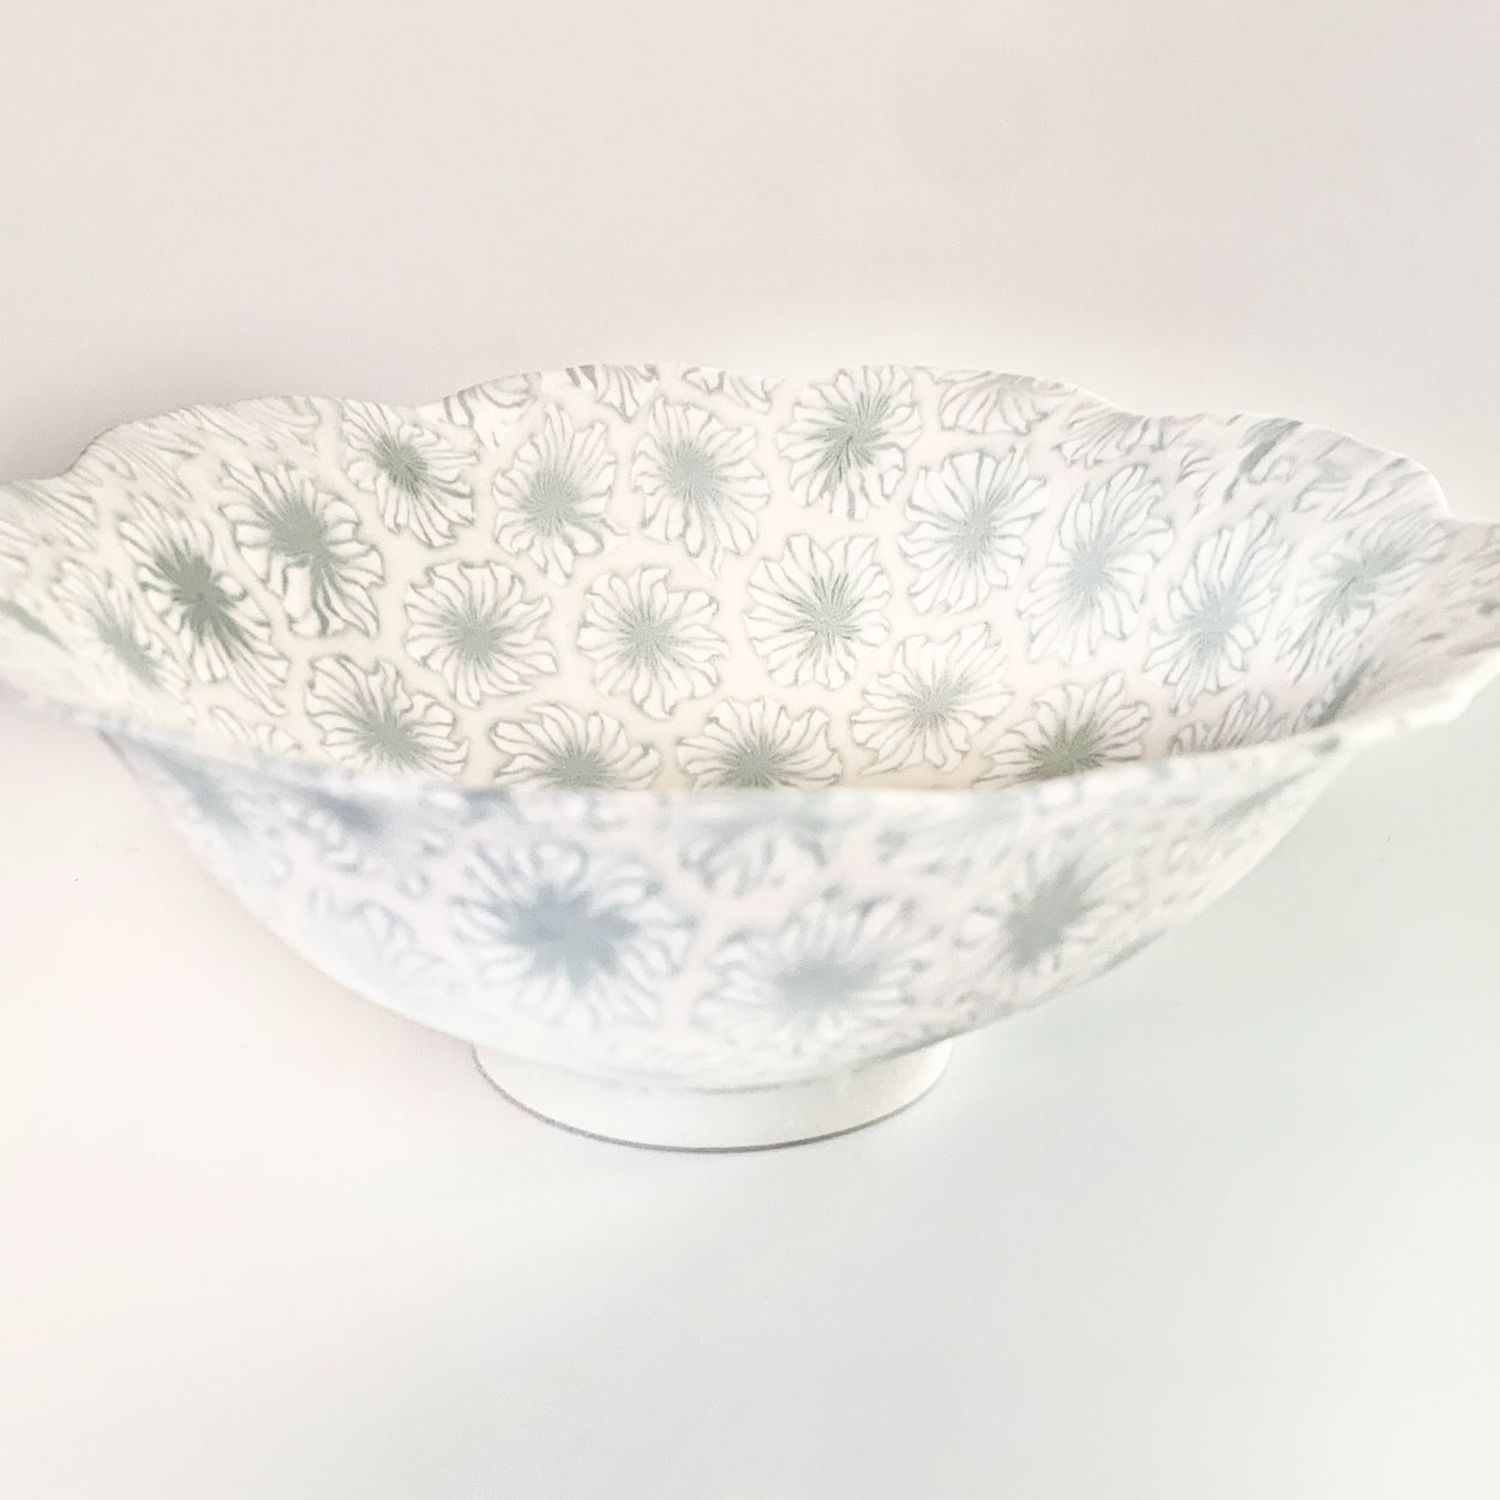 Eiko Maeda: Purple and White Bowl Product Image 1 of 2